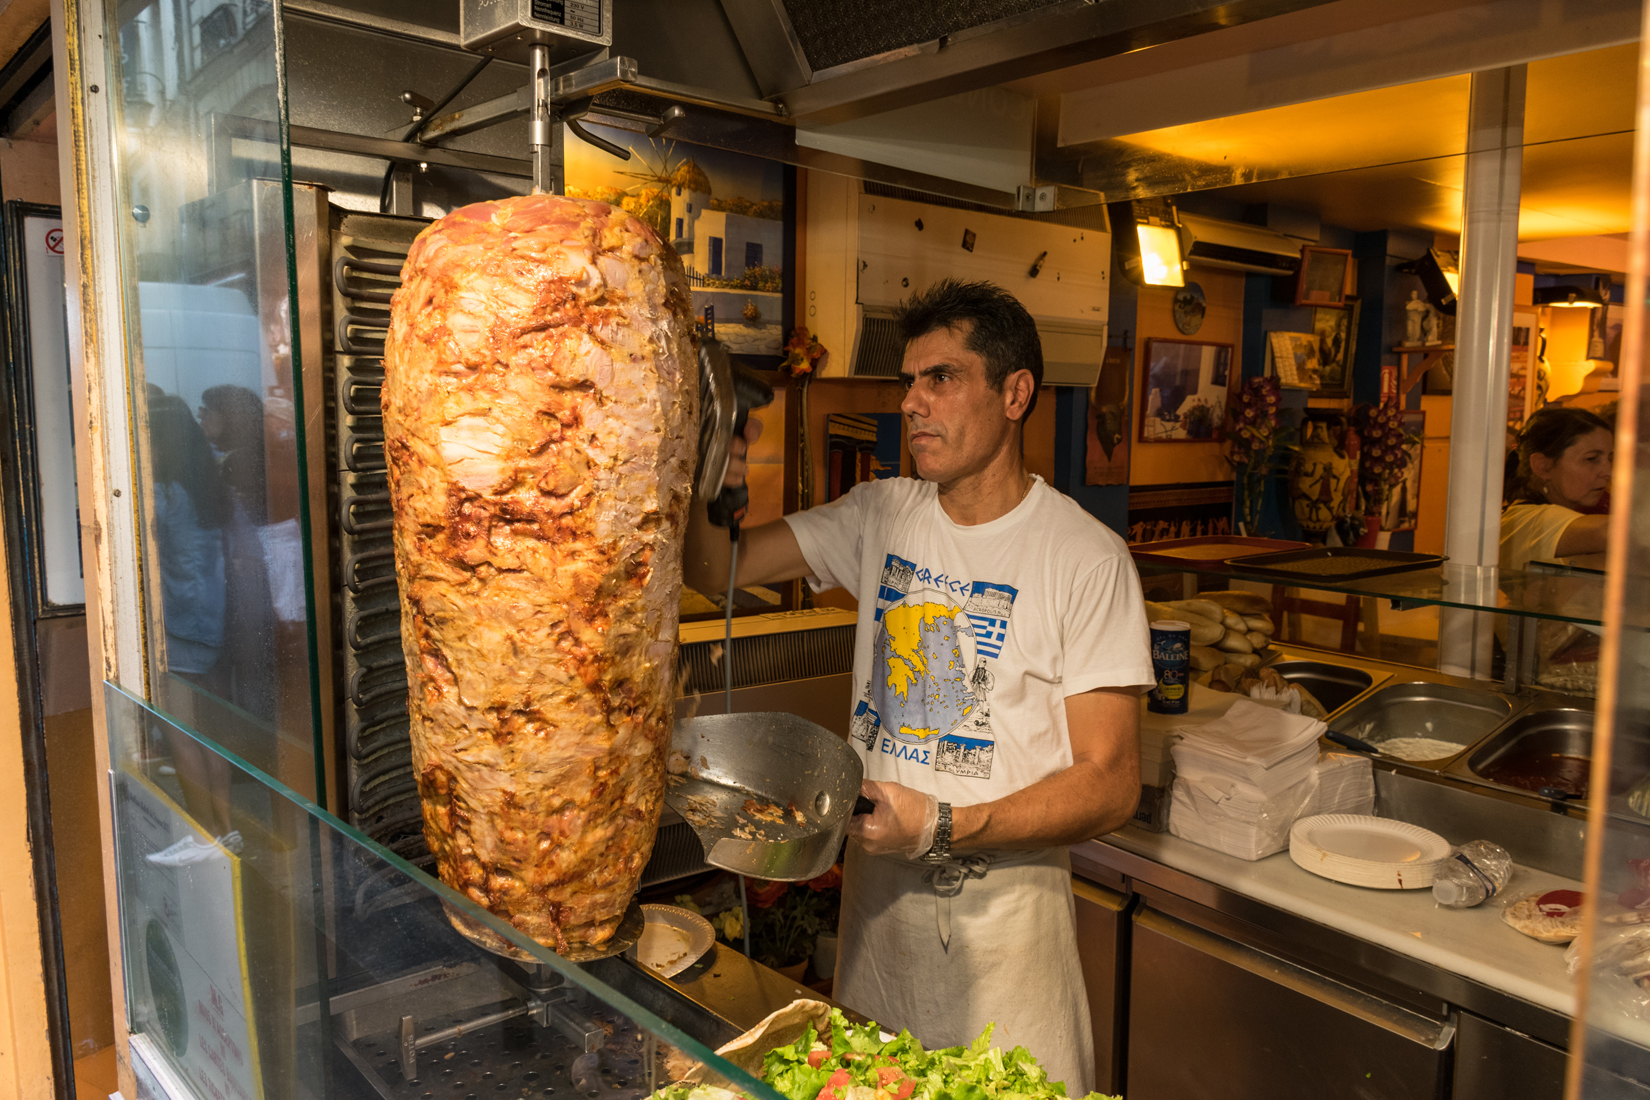 Greek kebabs seem particularly large